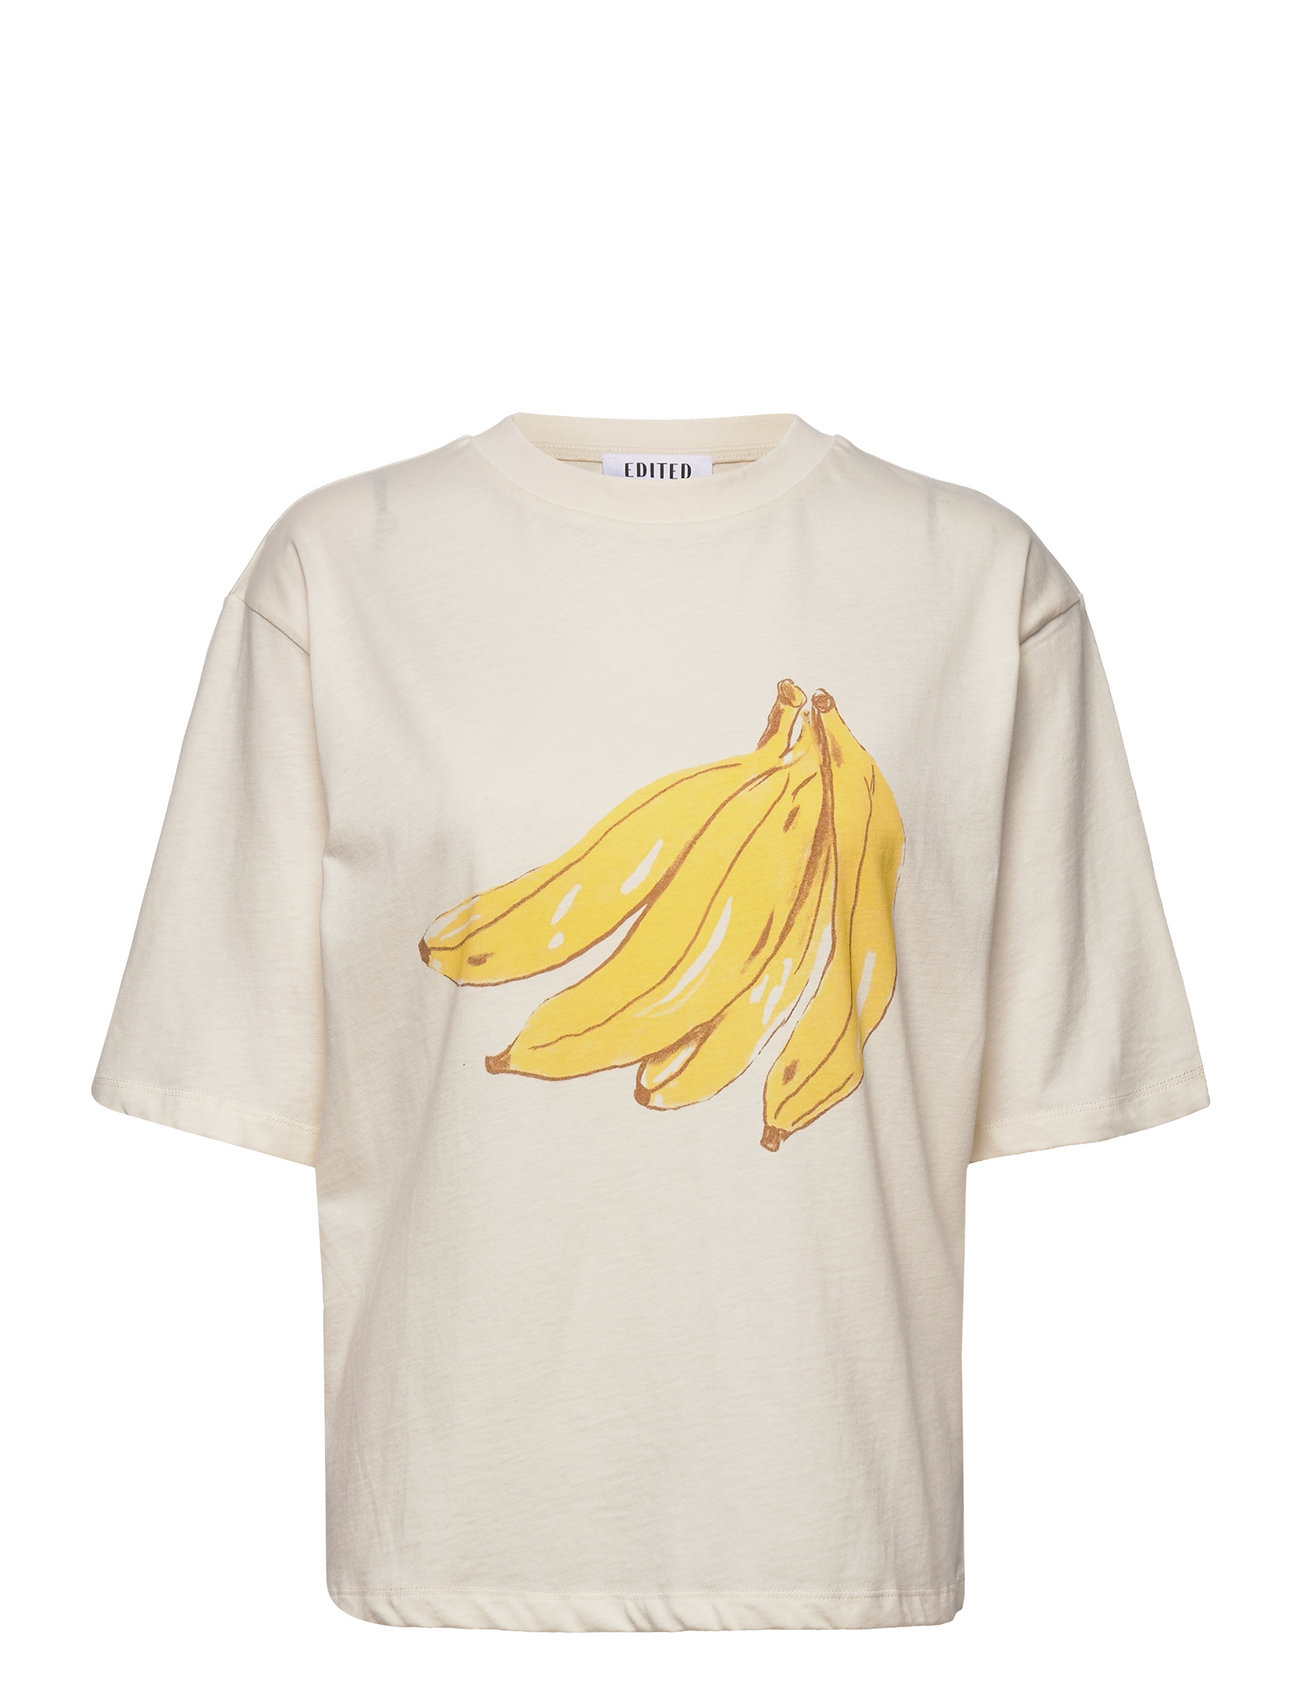 Dela T-Shirt T-shirts & Tops Short-sleeved Vit EDITED